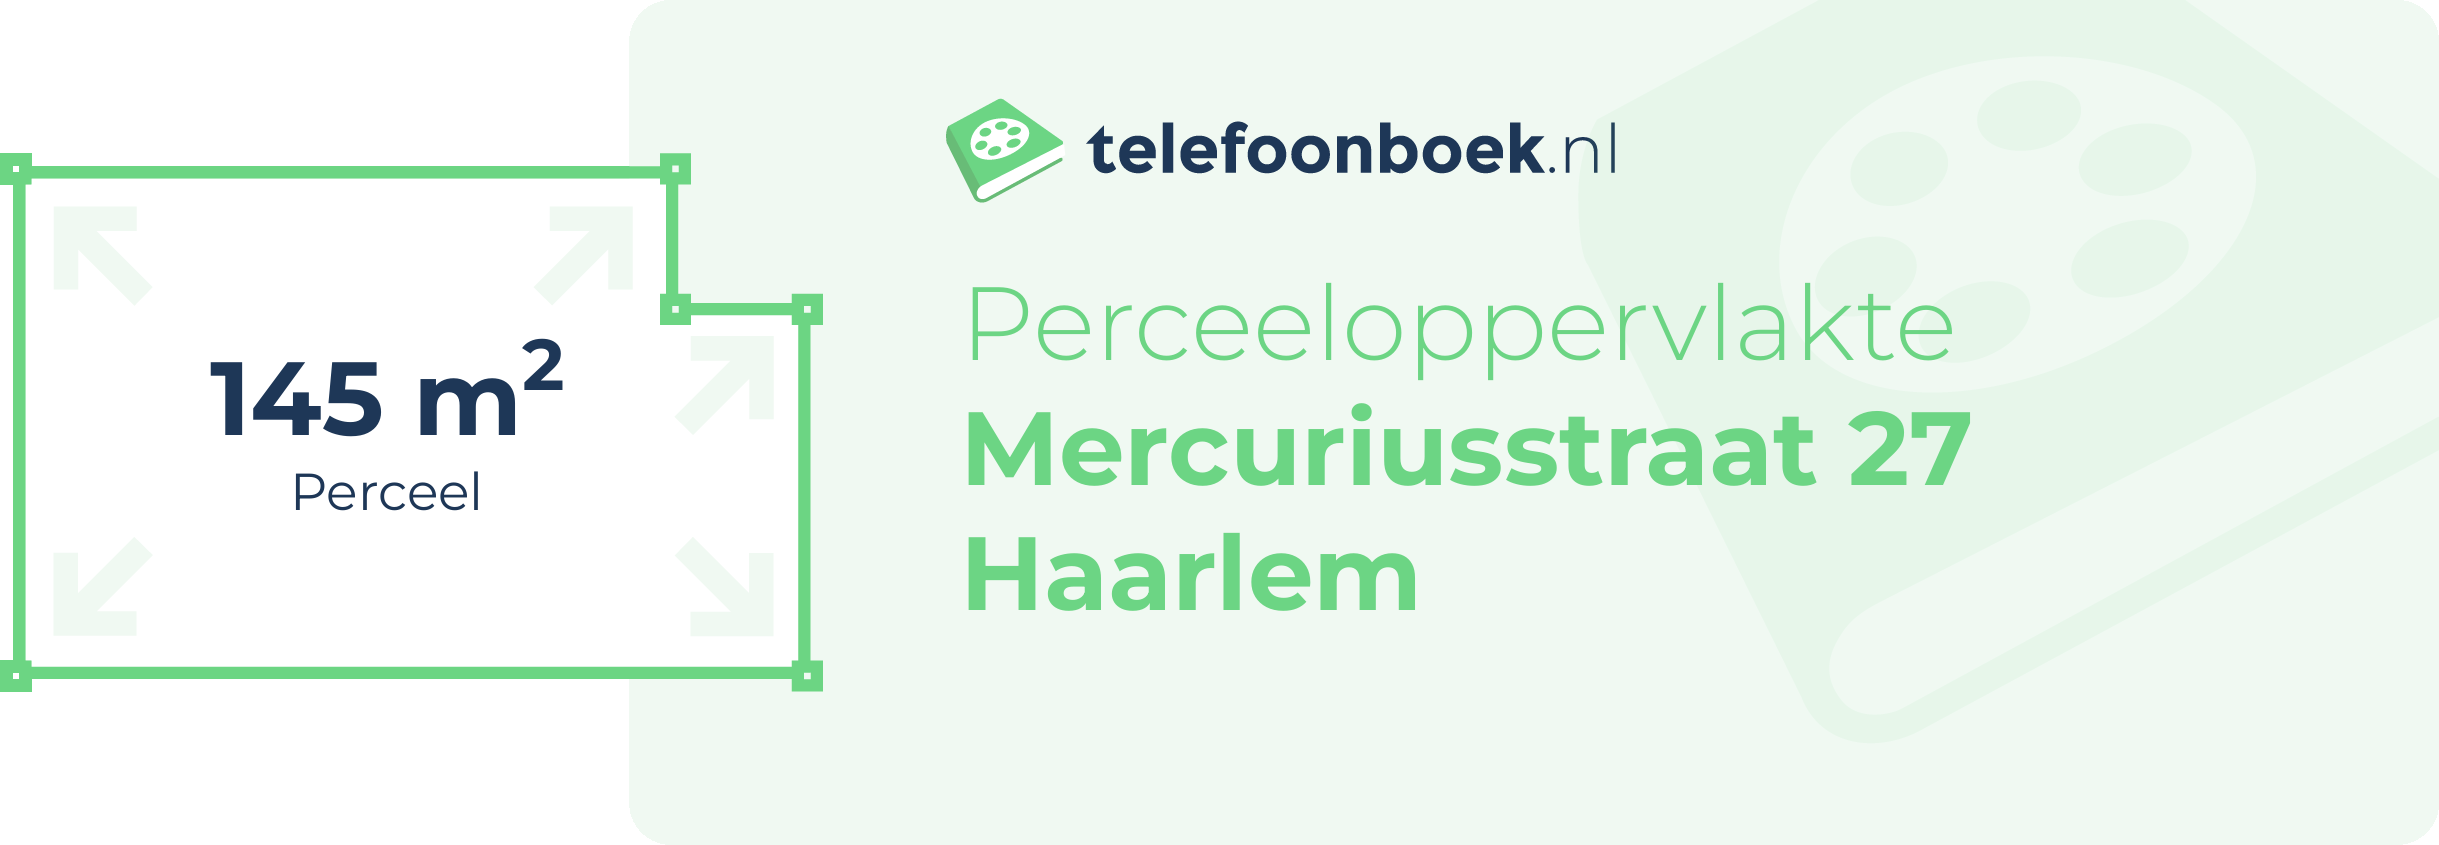 Perceeloppervlakte Mercuriusstraat 27 Haarlem